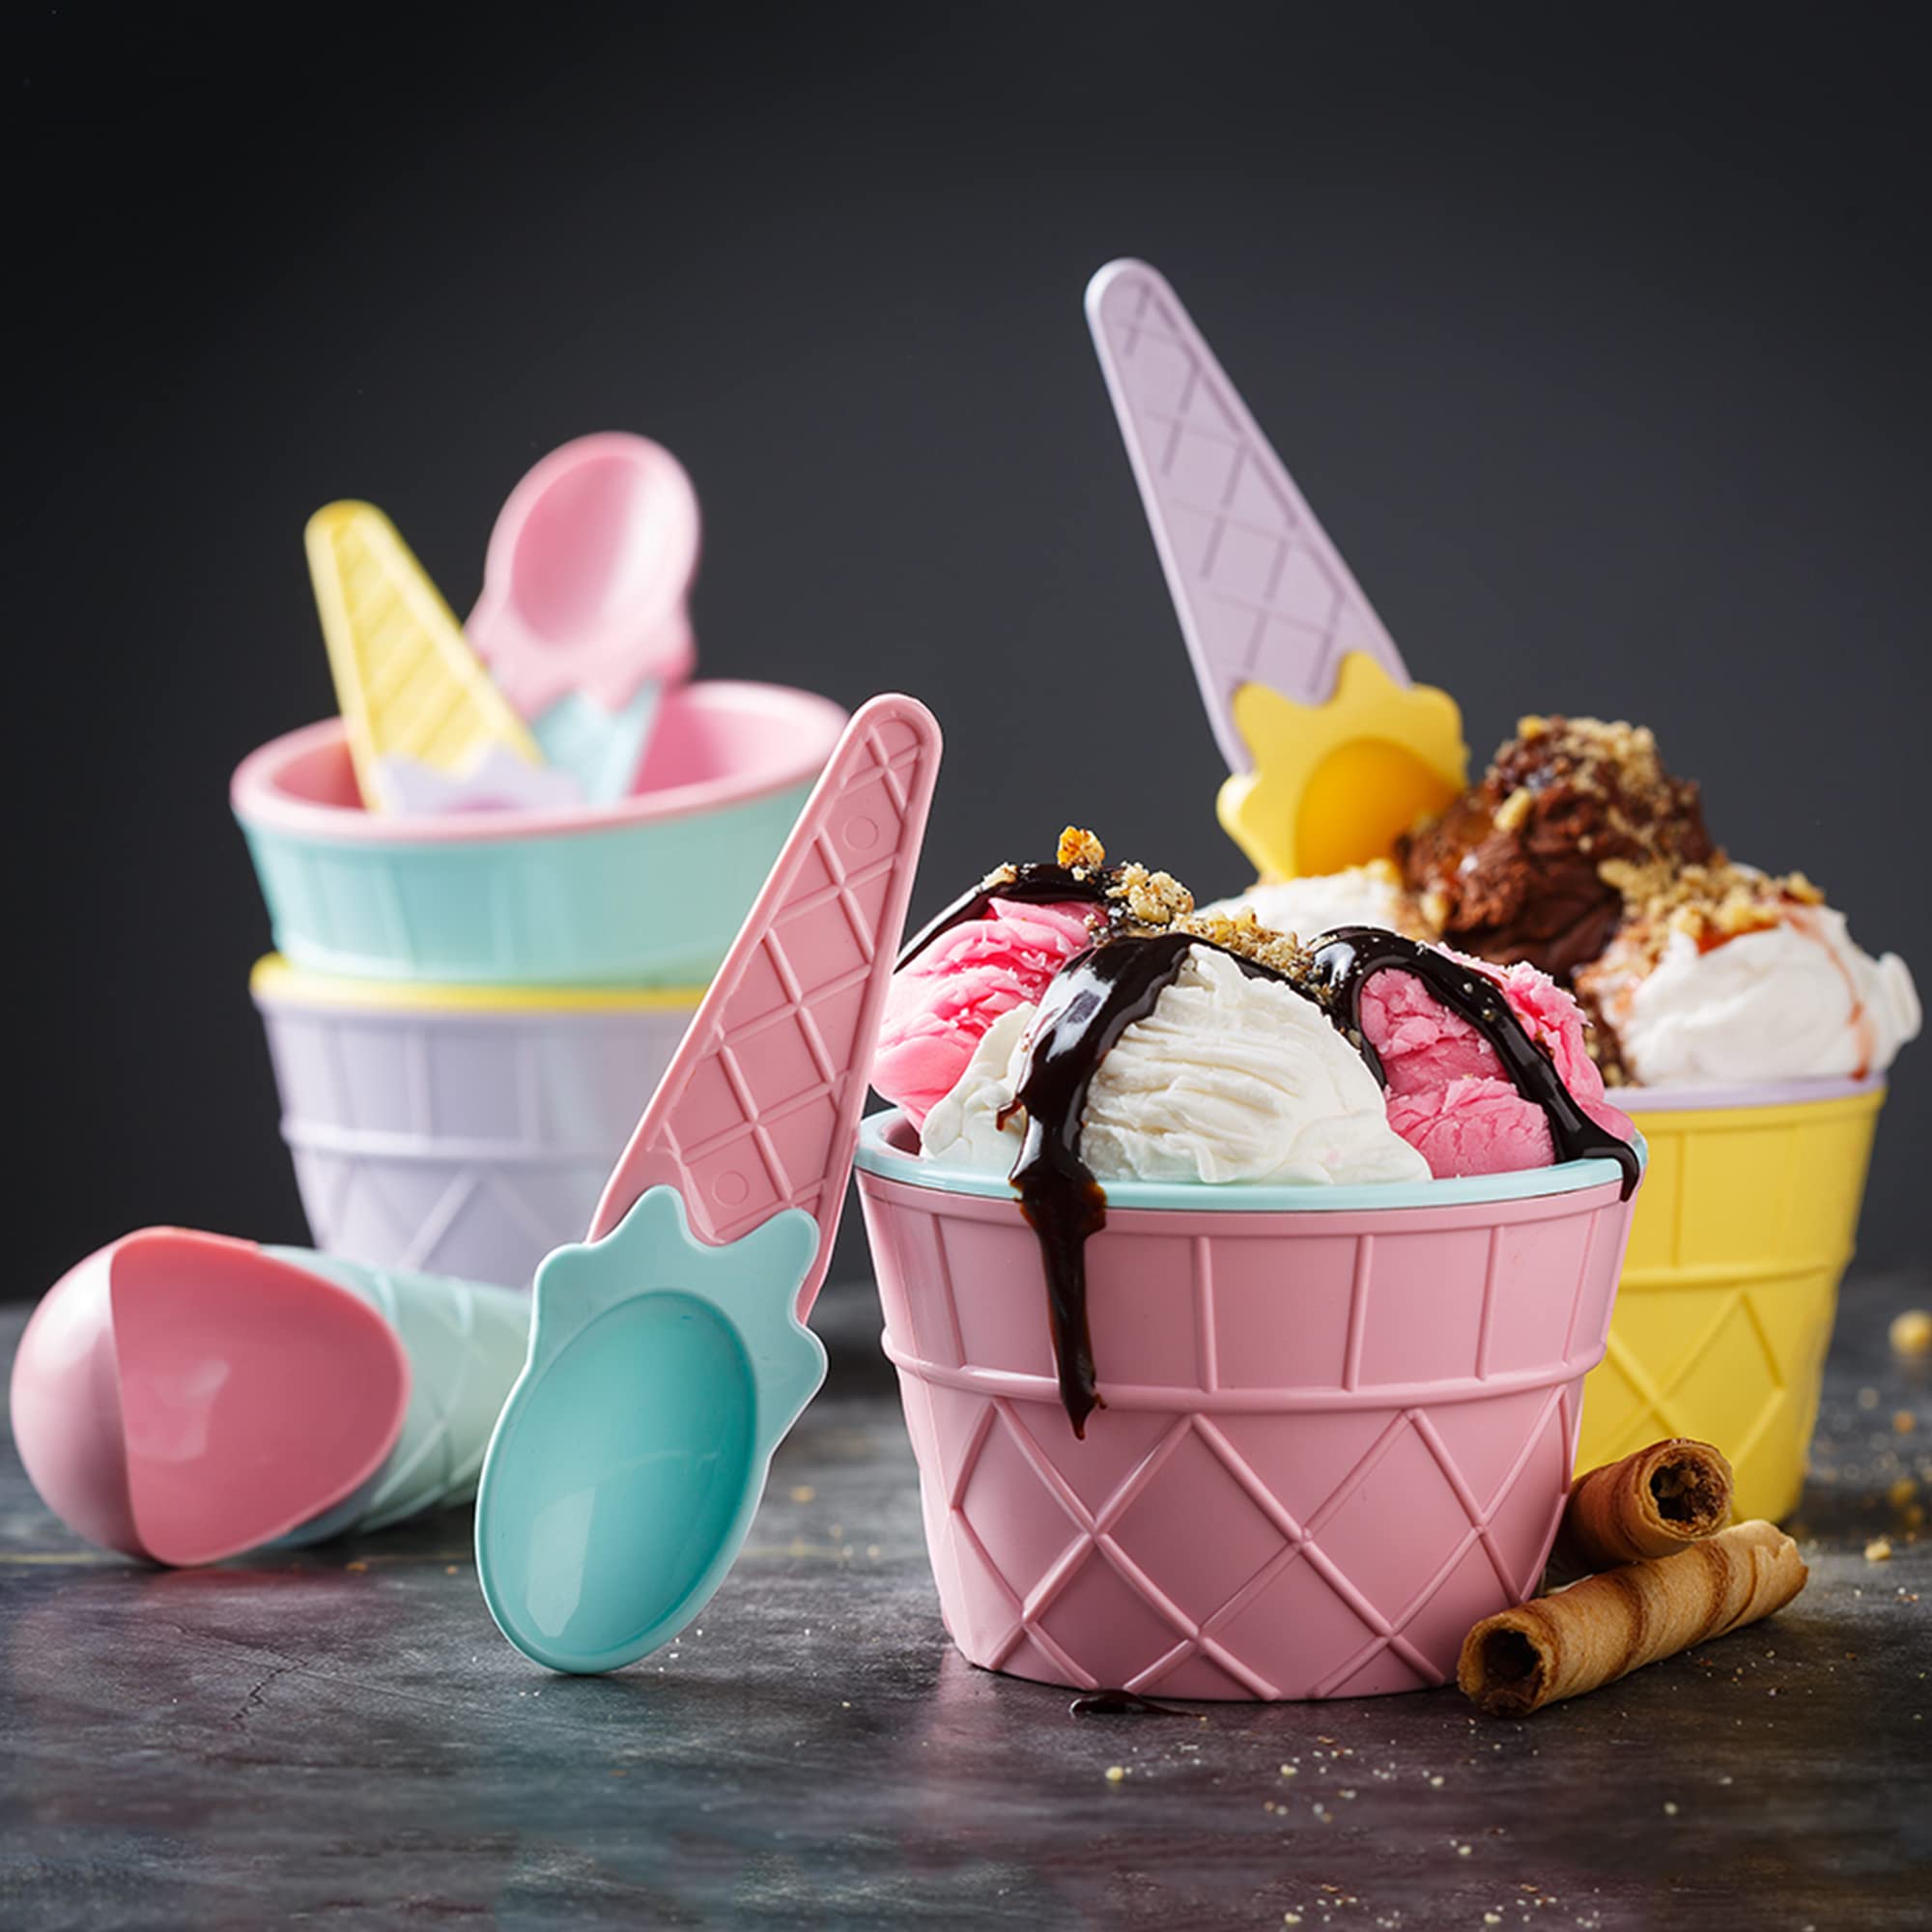 Crystalia Ice Cream Dessert Sundae Bowls, Small Plastic Reusable Ice Cream Cups, BPA-Free, Set of 9, 5 fl oz